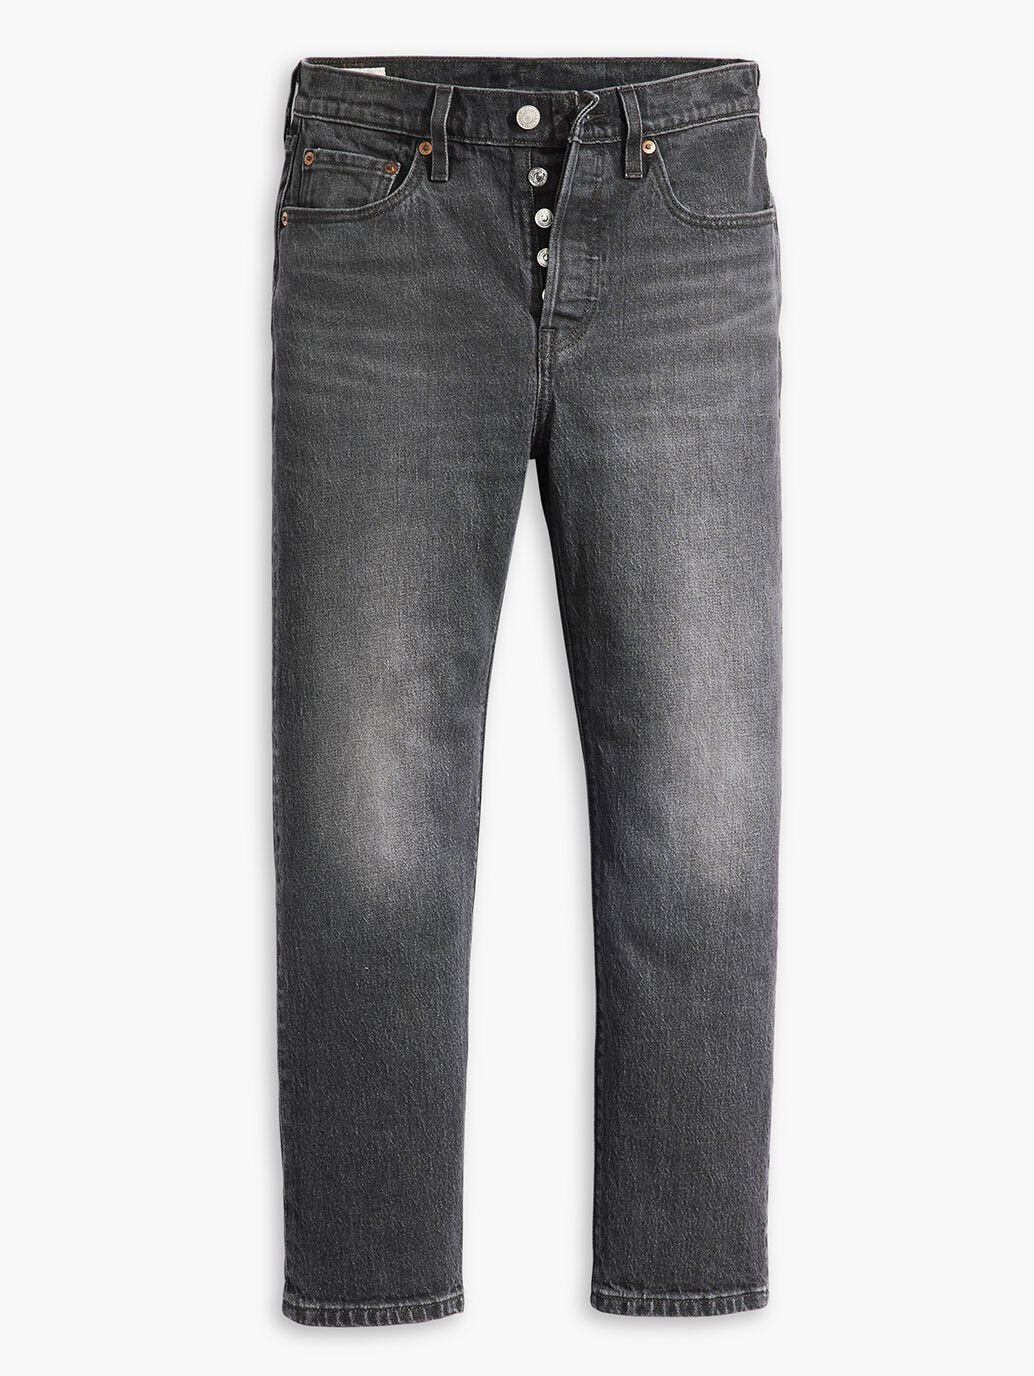 LEVIS // 501 Crop Jeans LONG LIVE THE QUEEN